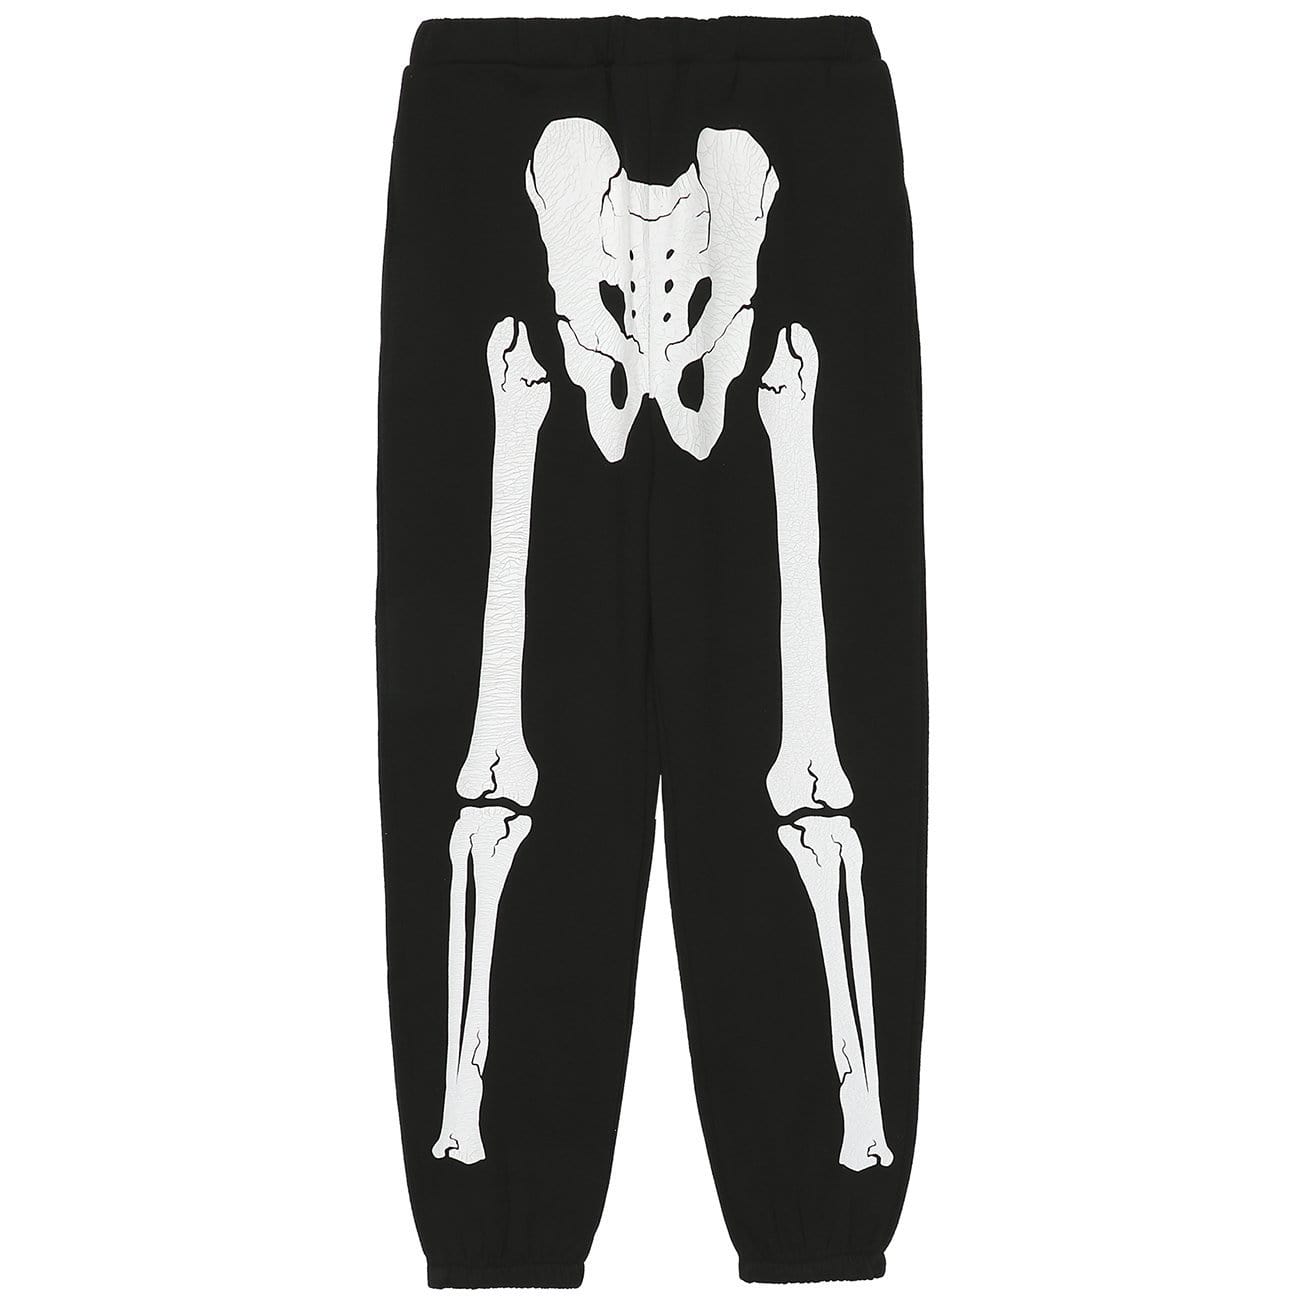 Human Skeleton Print Pants Streetwear Brand Techwear Combat Tactical YUGEN THEORY